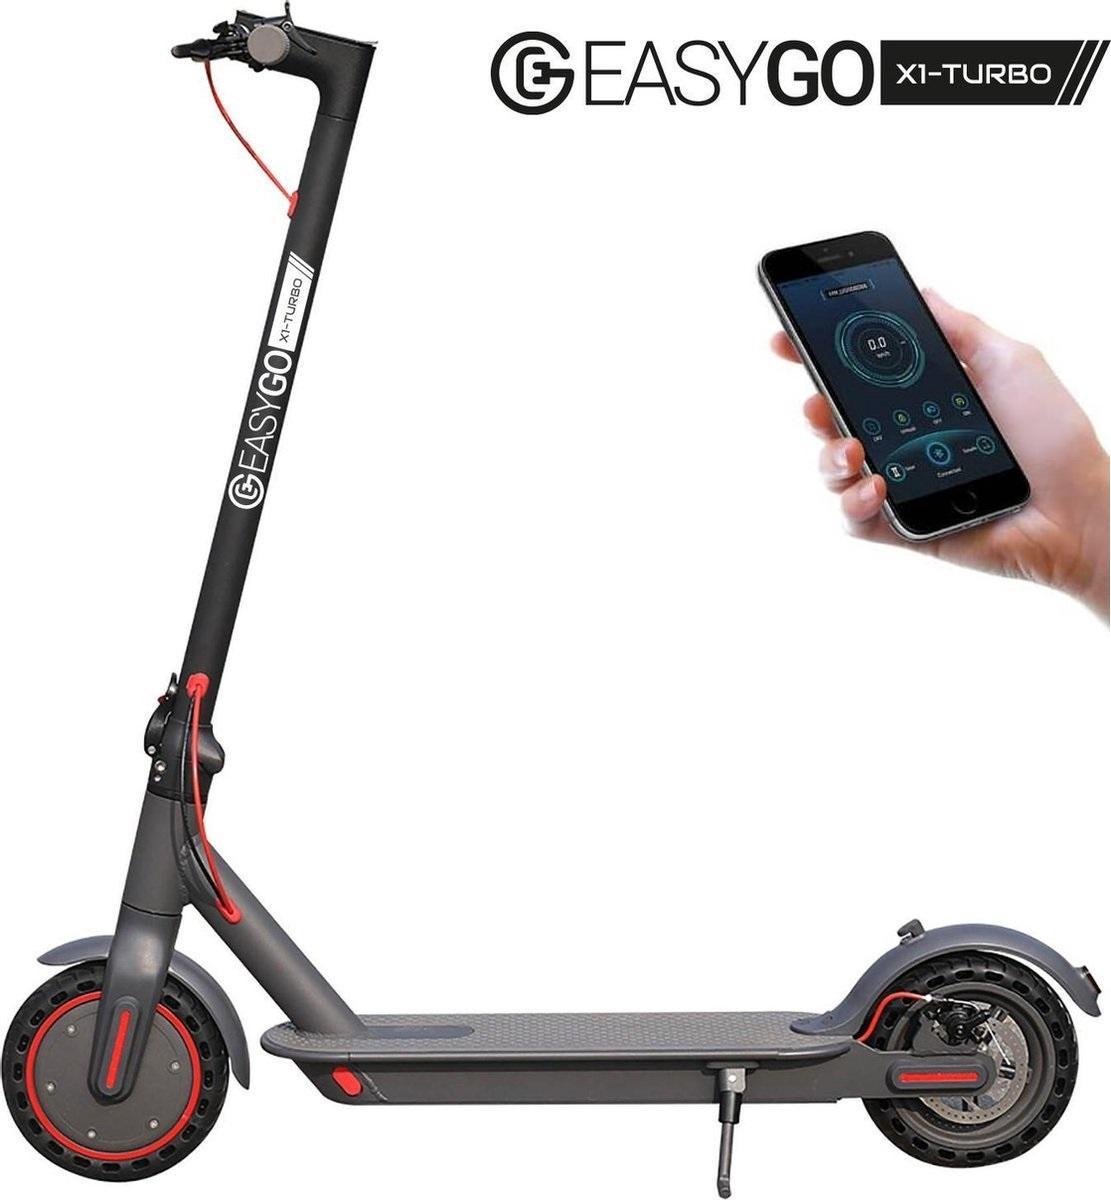 EasyGo X1-TURBO | Compact Lichtgewicht | Max. Snelheid 31 km u | Cruise control | Max. actieradius 45km | Max. 500W Motor| iOS Android App | Anti-lek banden